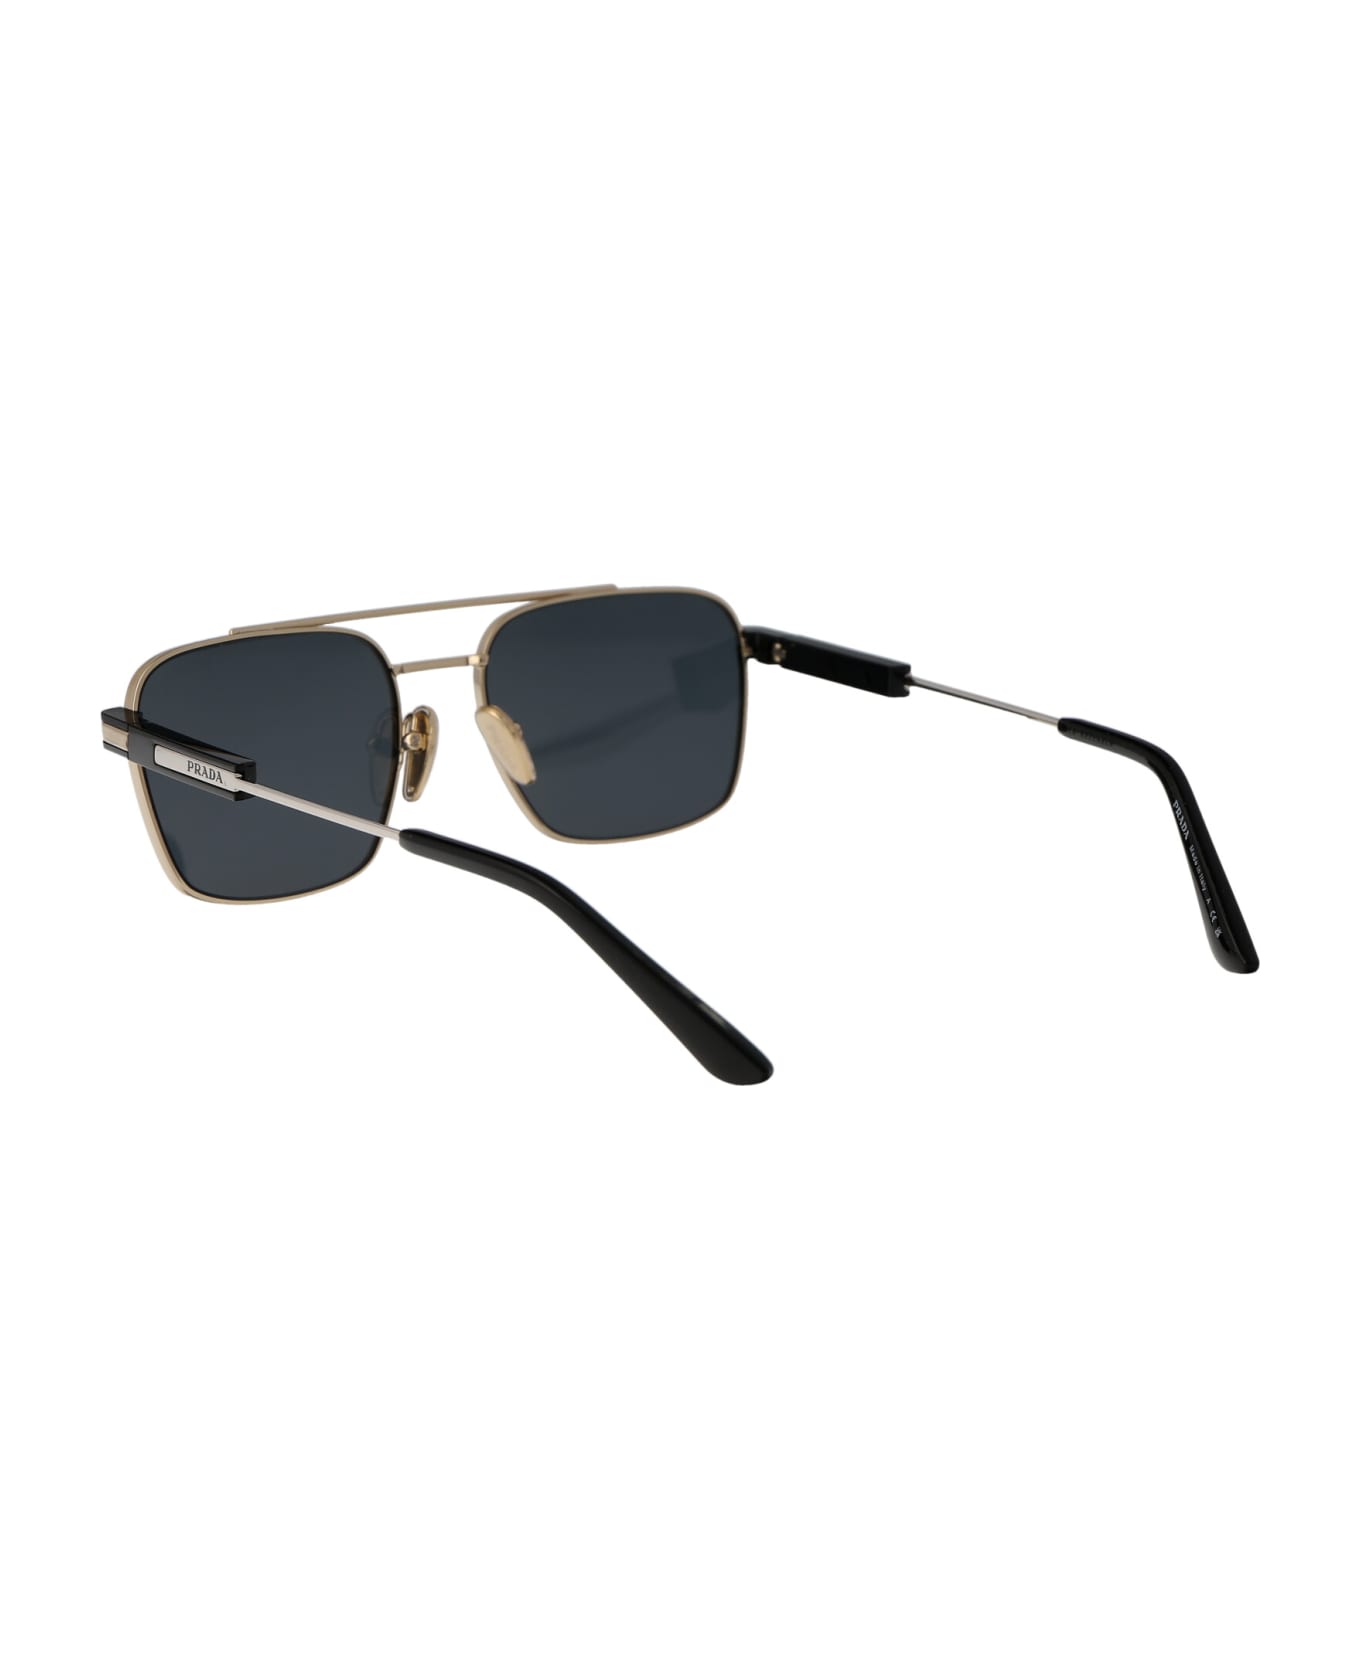 Prada Eyewear 0pr 67zs Sunglasses - ZVN09T Pale Gold サングラス